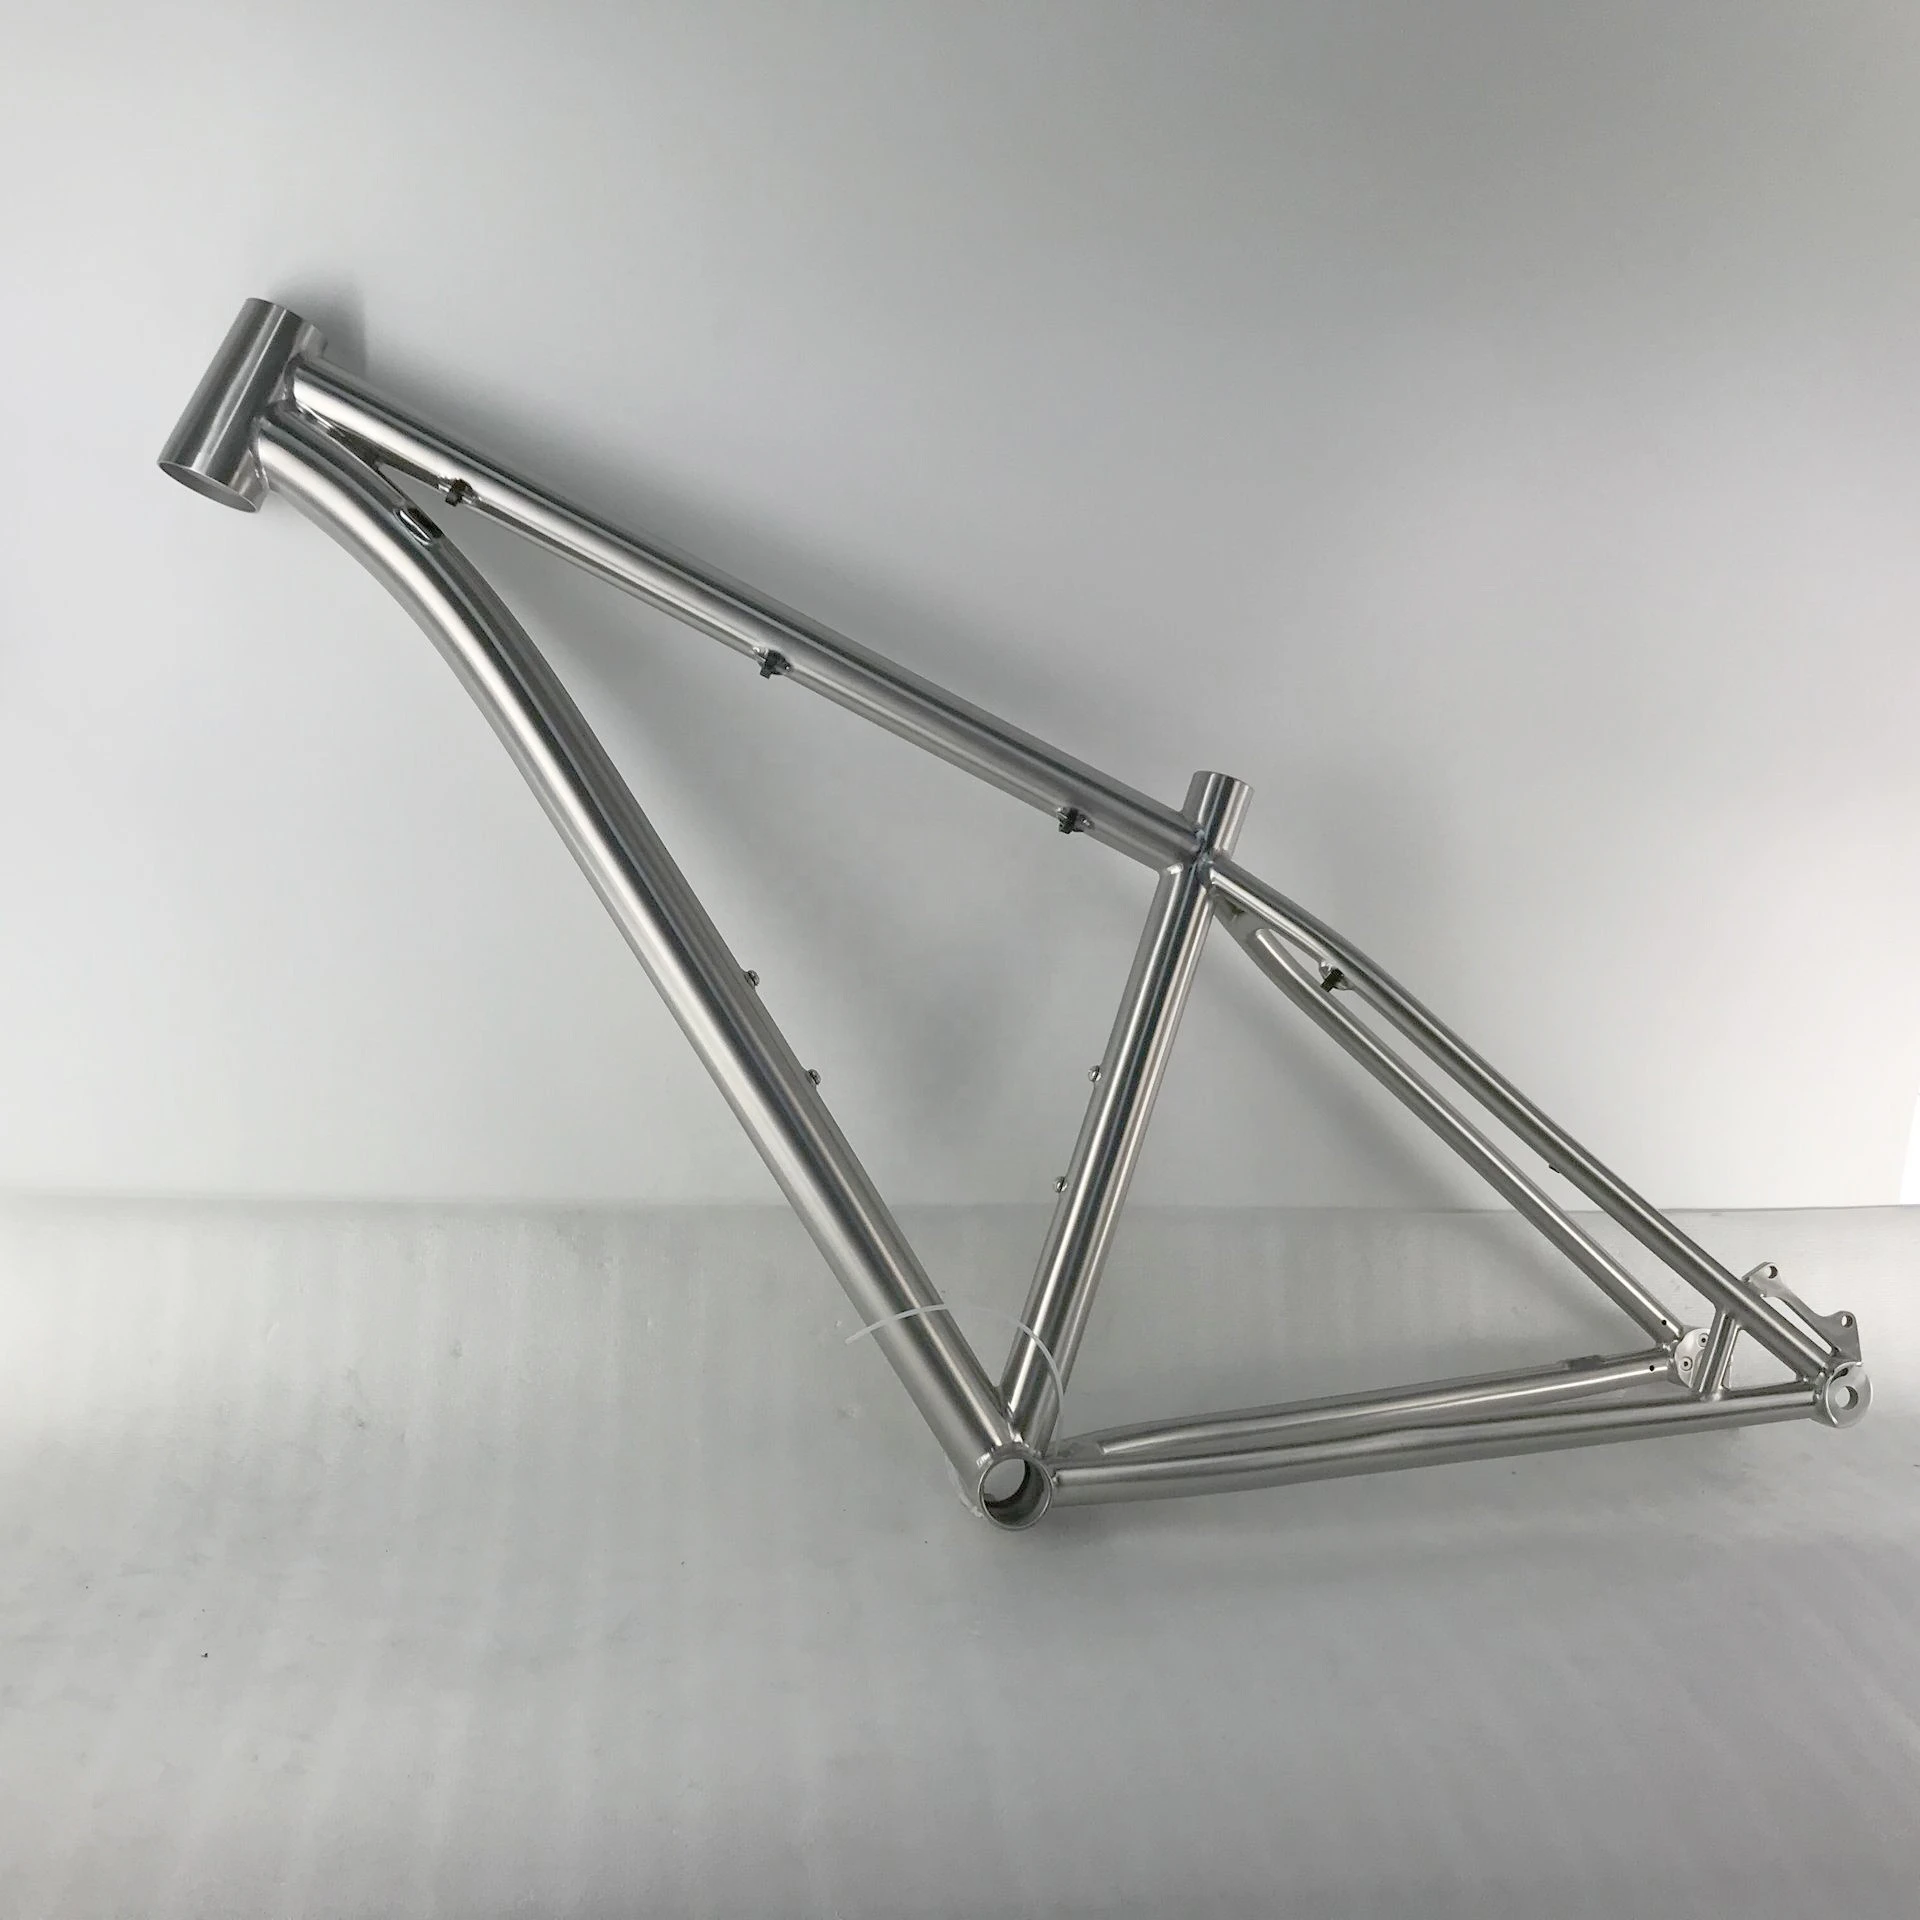 Titanium hardtail  mountain bike frame for 29er wheels